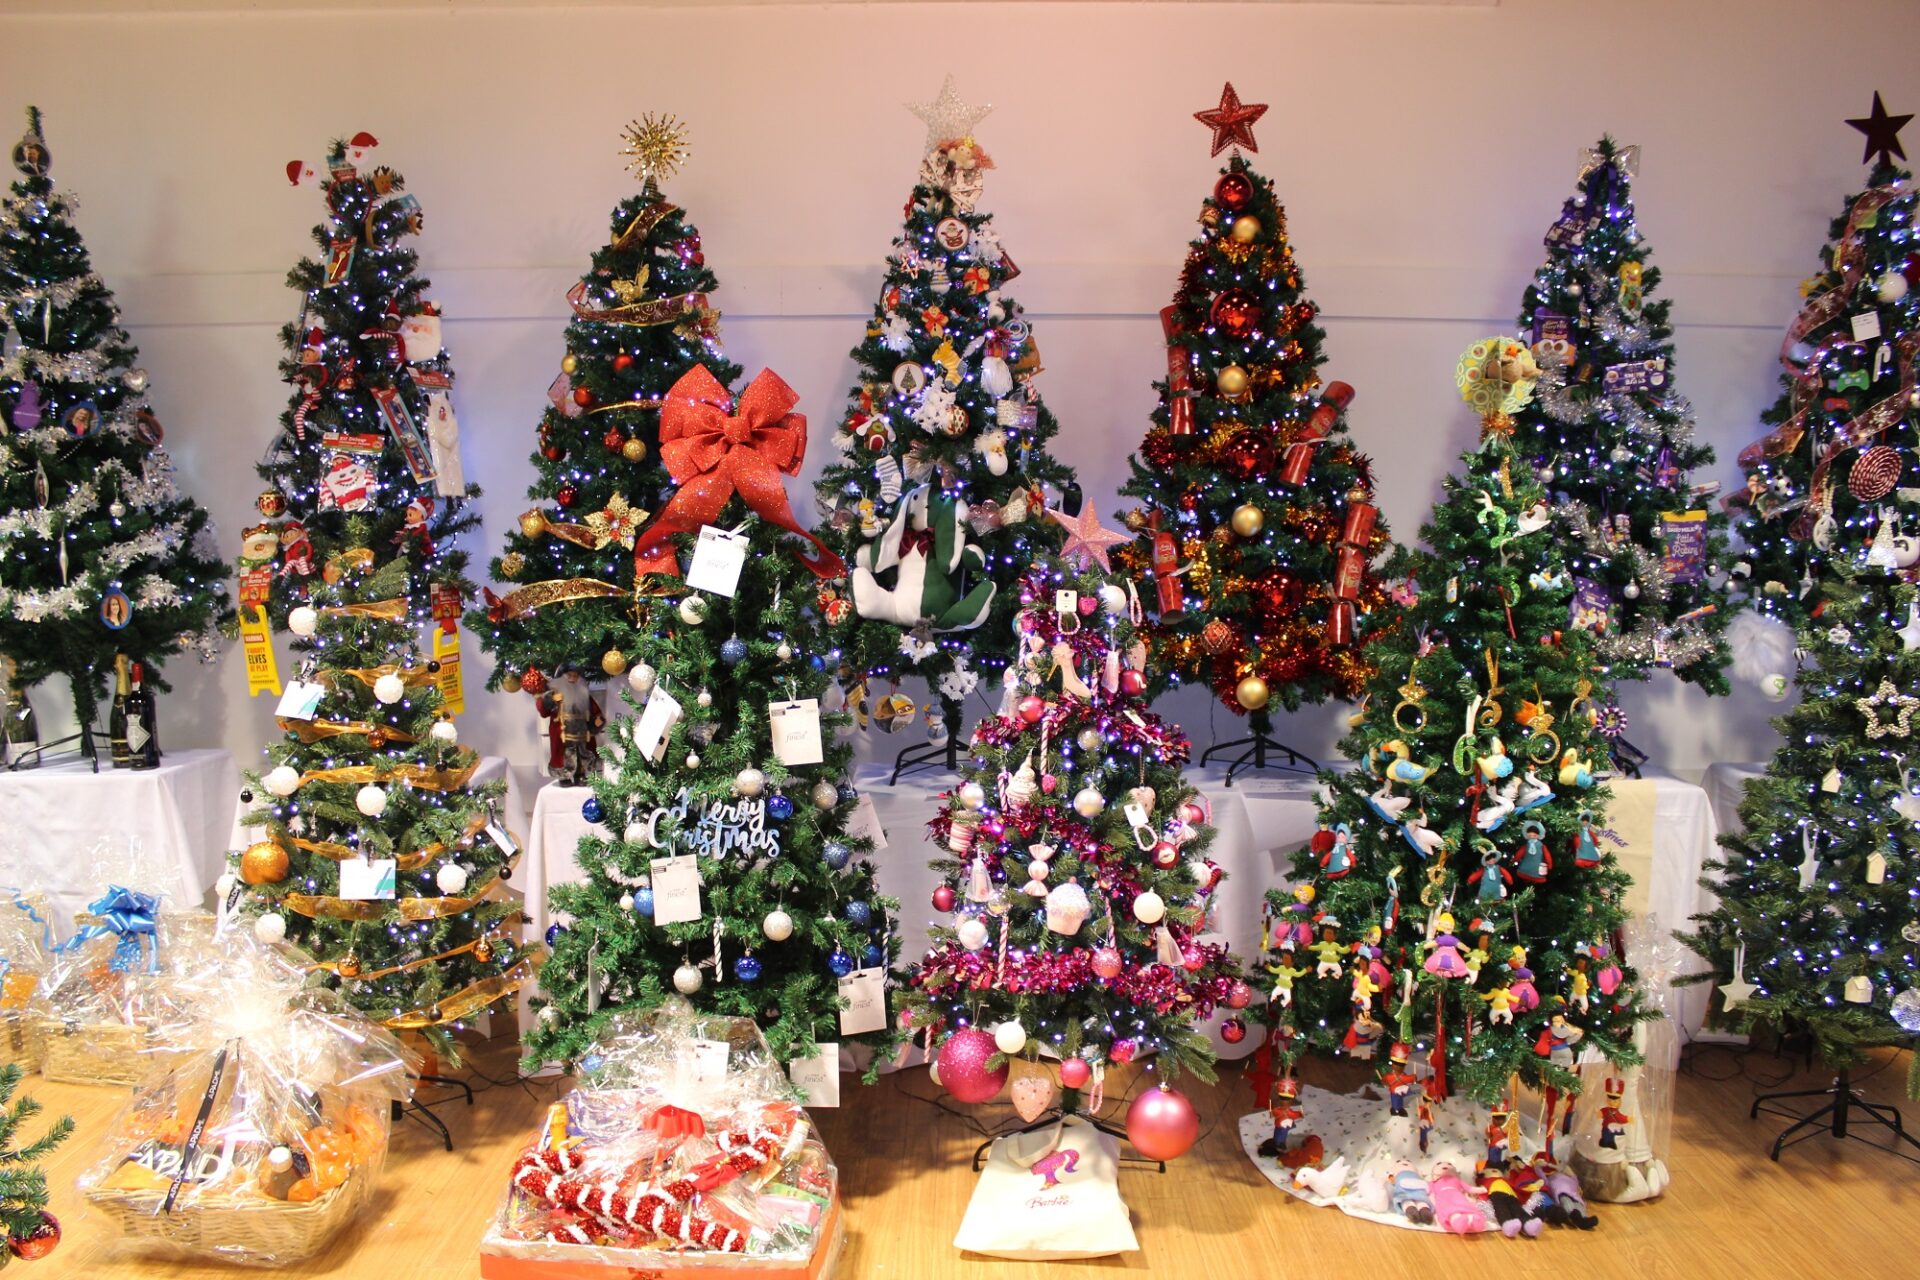 Rows of Christmas tree